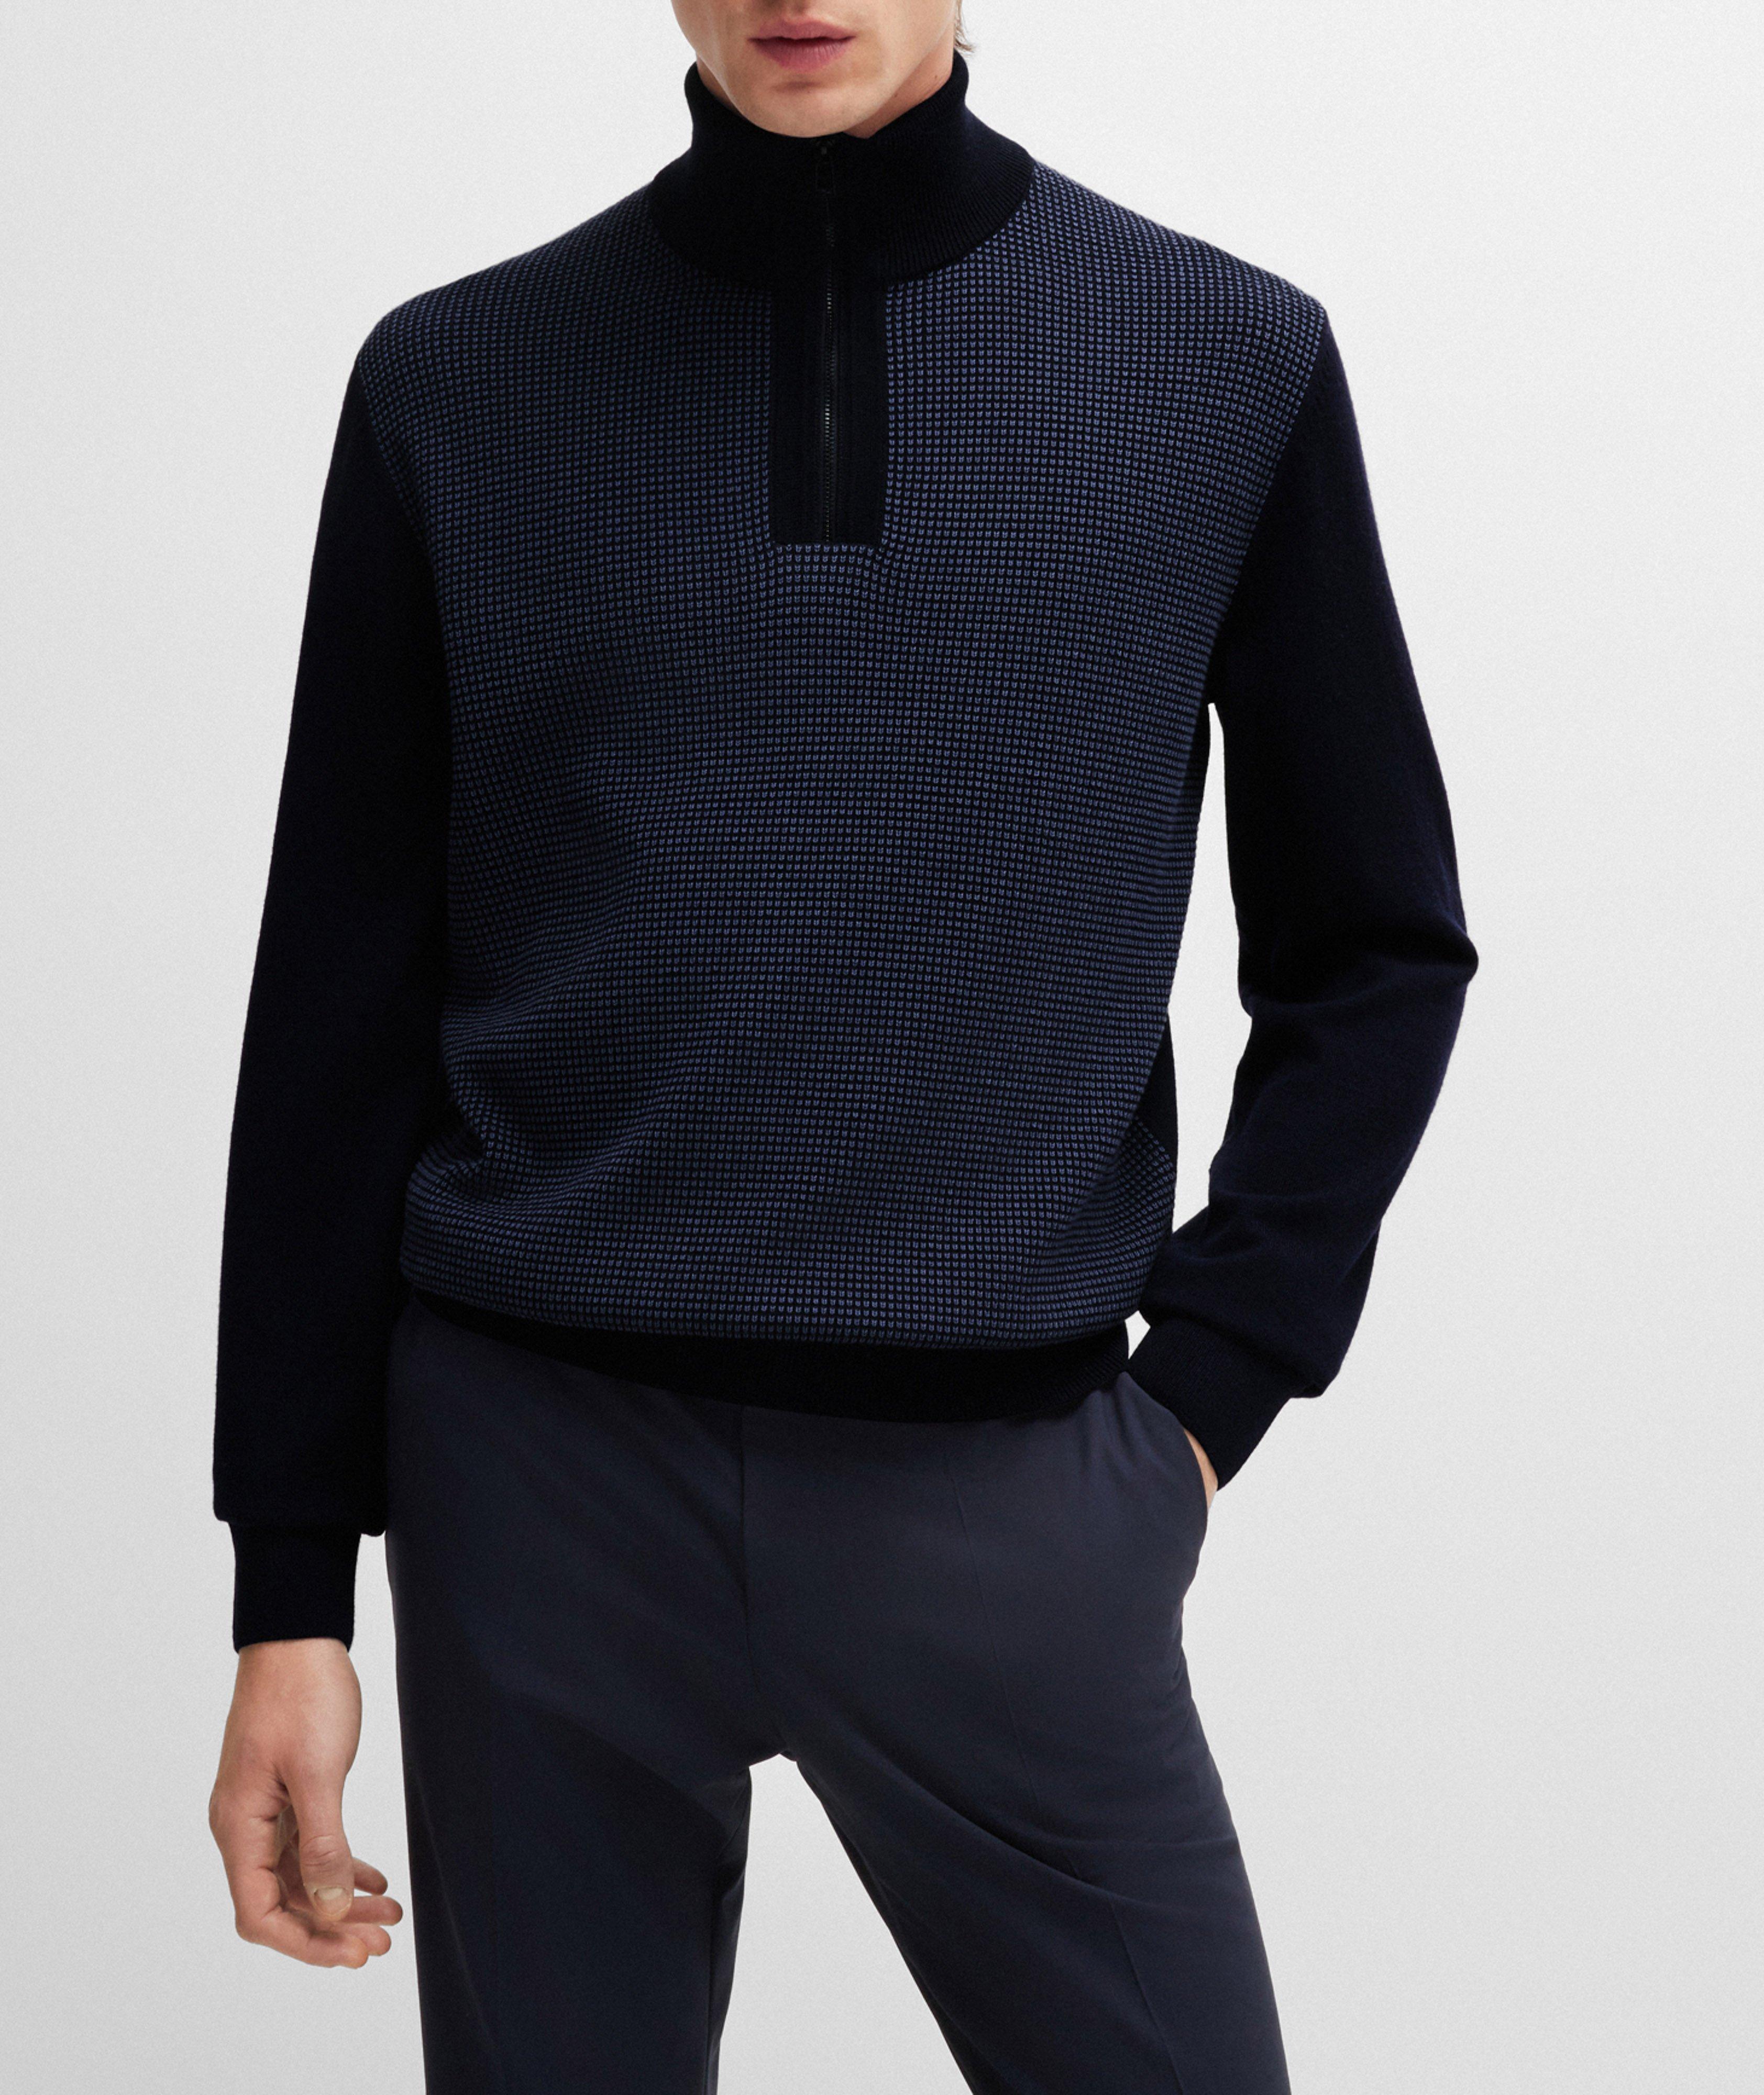 BLACK HERITAGE Collection Virgin Wool Quarter-Zip Sweater image 1